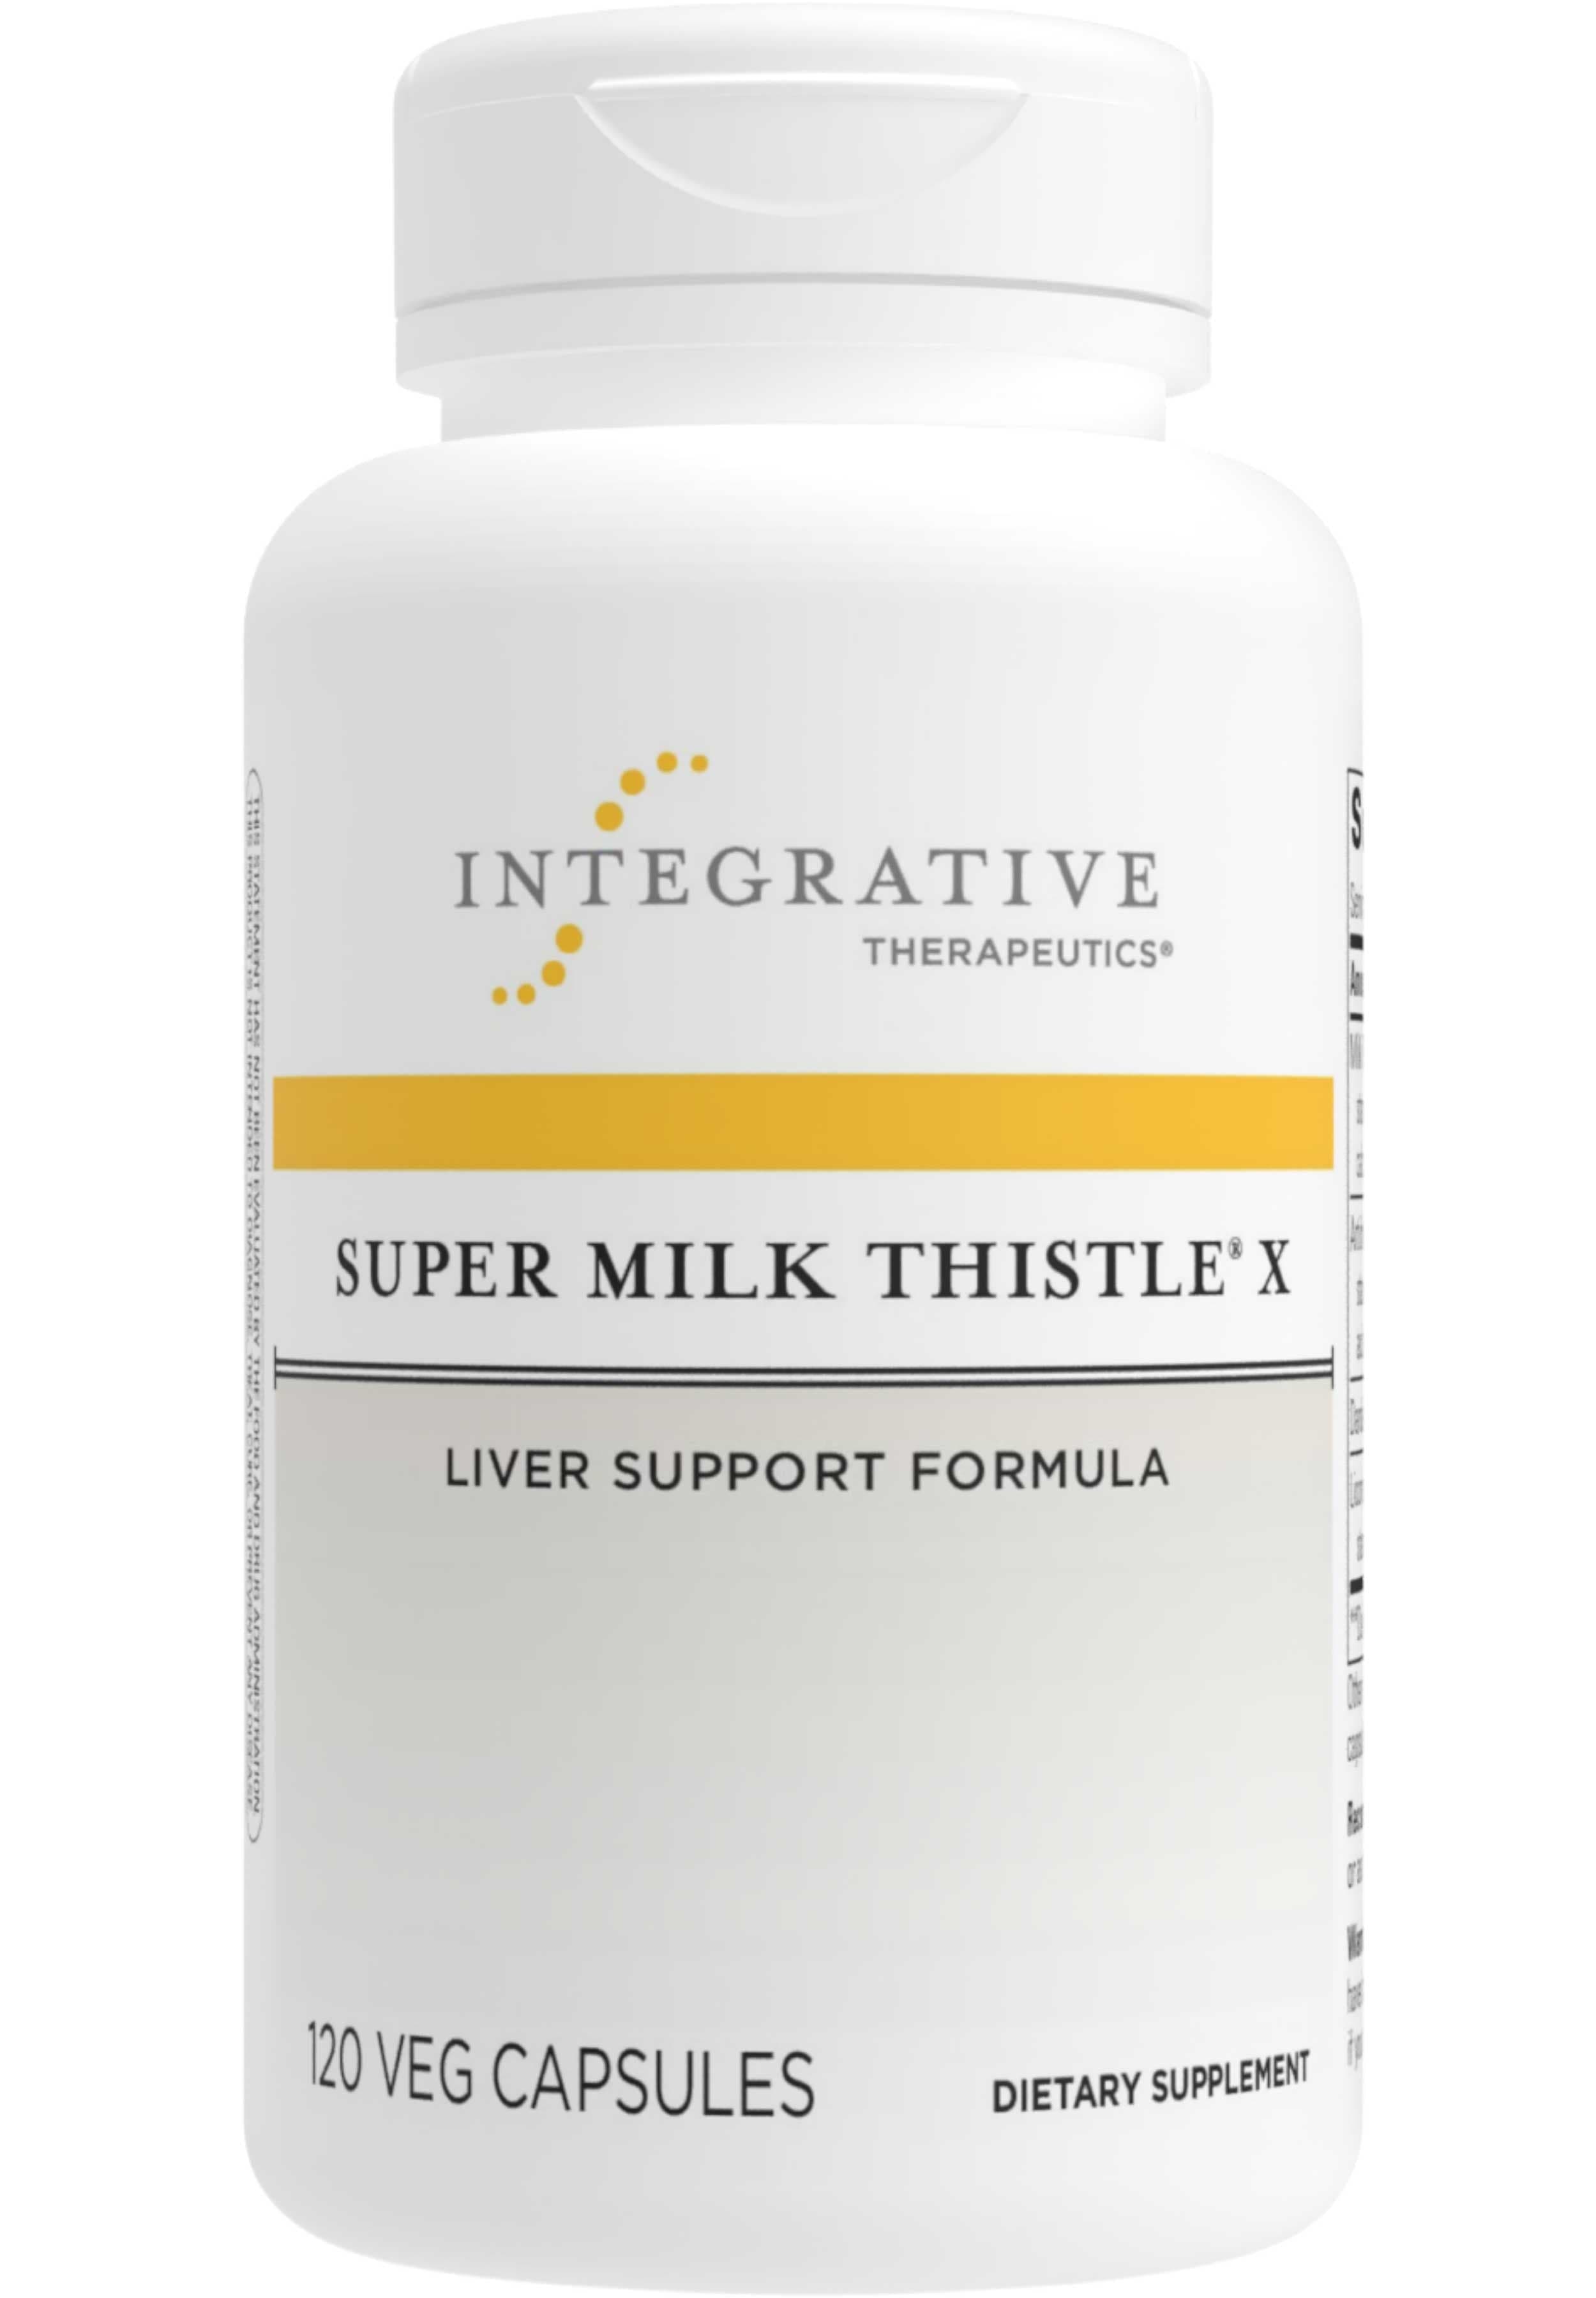 Integrative Therapeutics Super Milk Thistle X